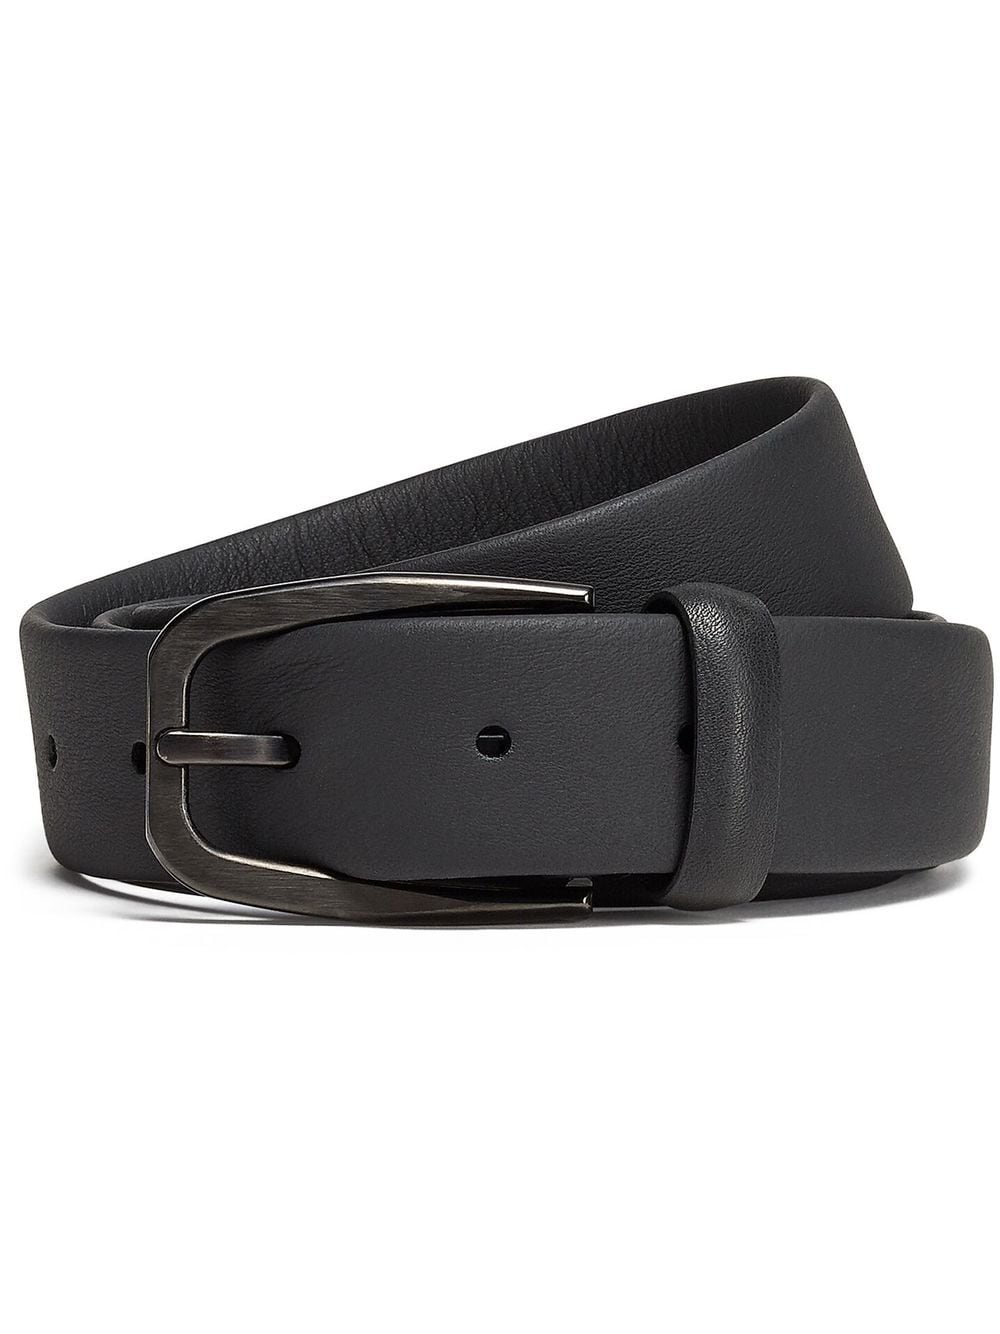 Zegna classic leather belt - Black von Zegna